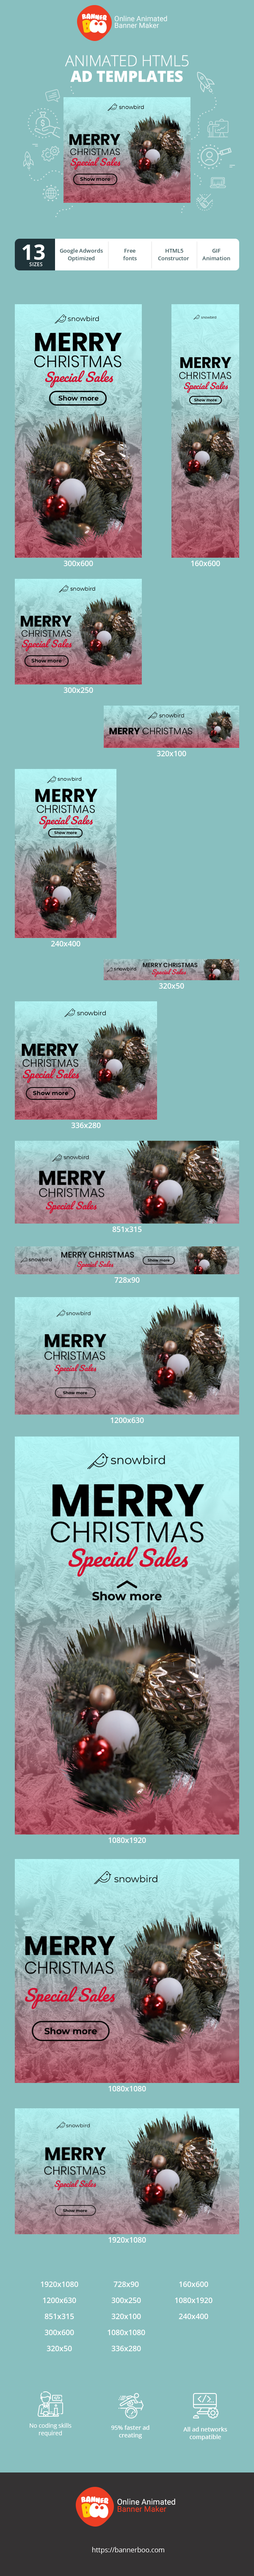 Шаблон рекламного банера — Merry Christmas — Special Sales